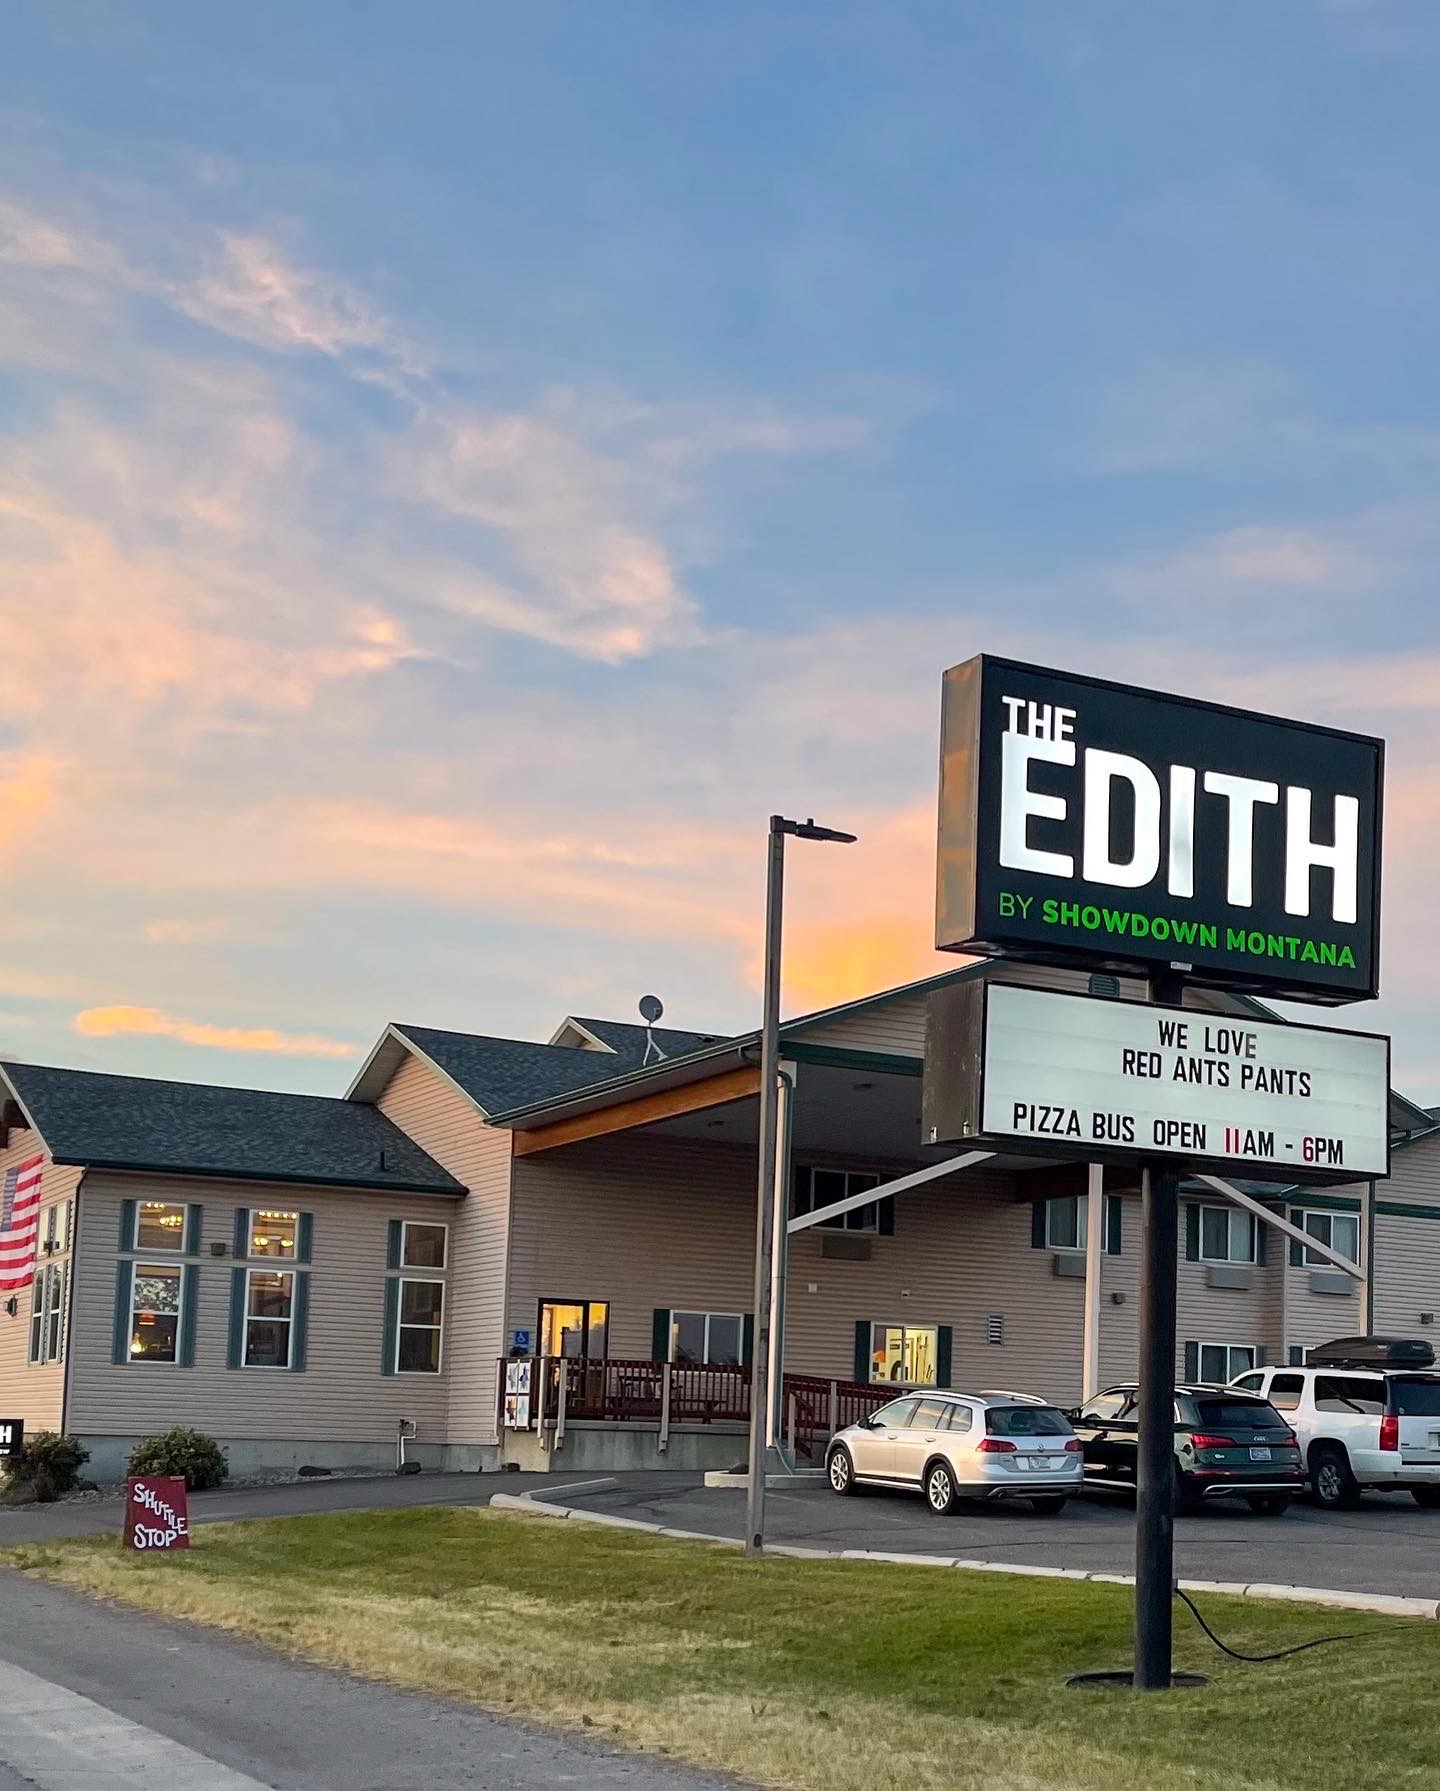 the Edith hotel